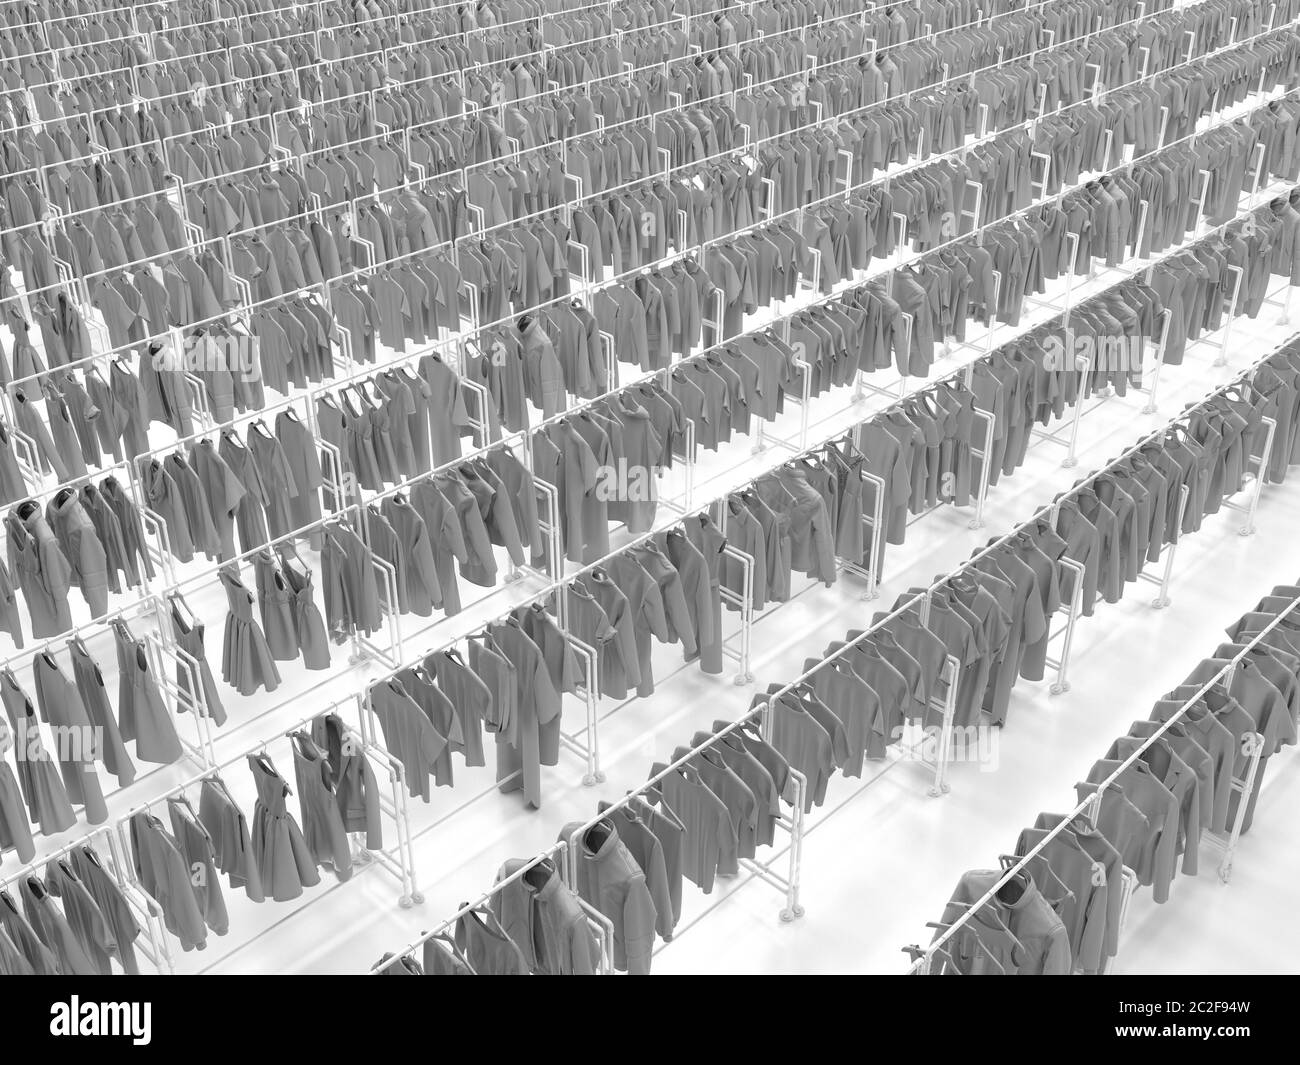 Long rows of similar uniform clothing racks. Featureless monotonous gray clothes. Top view. 3D render illustration Stock Photo